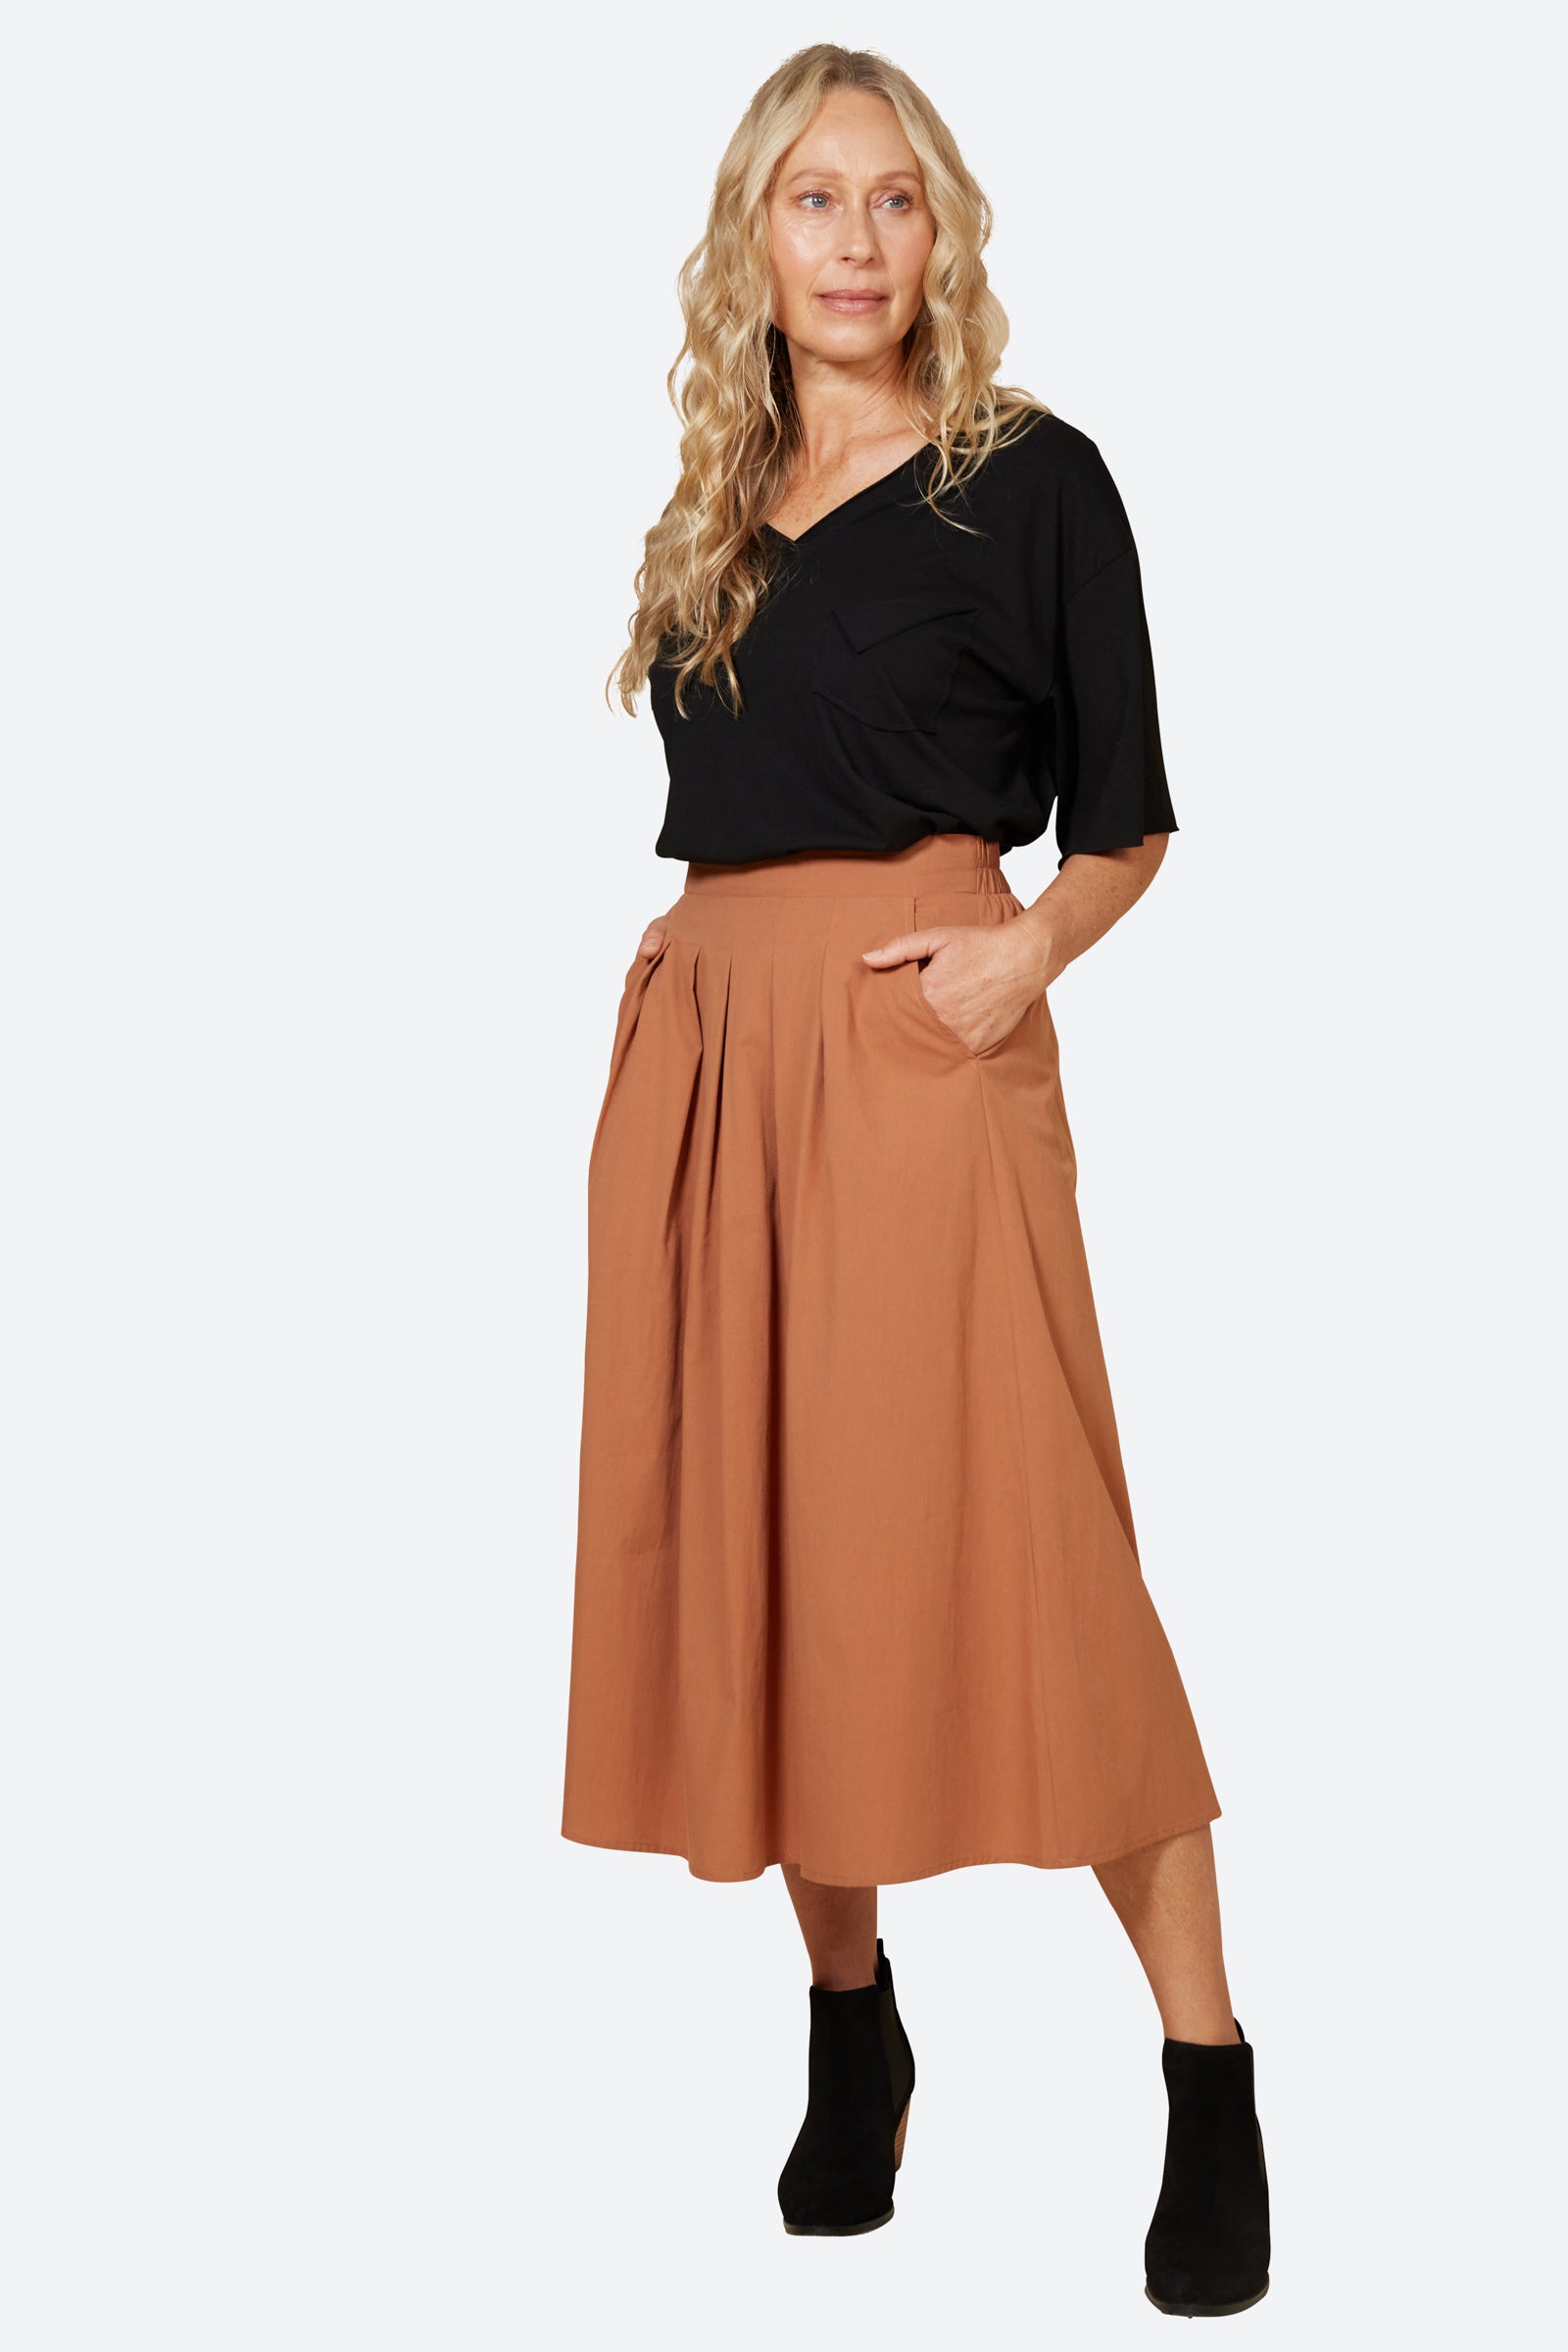 Studio Pleat Skirt - Cinnamon - eb&ive Clothing - Skirt Maxi